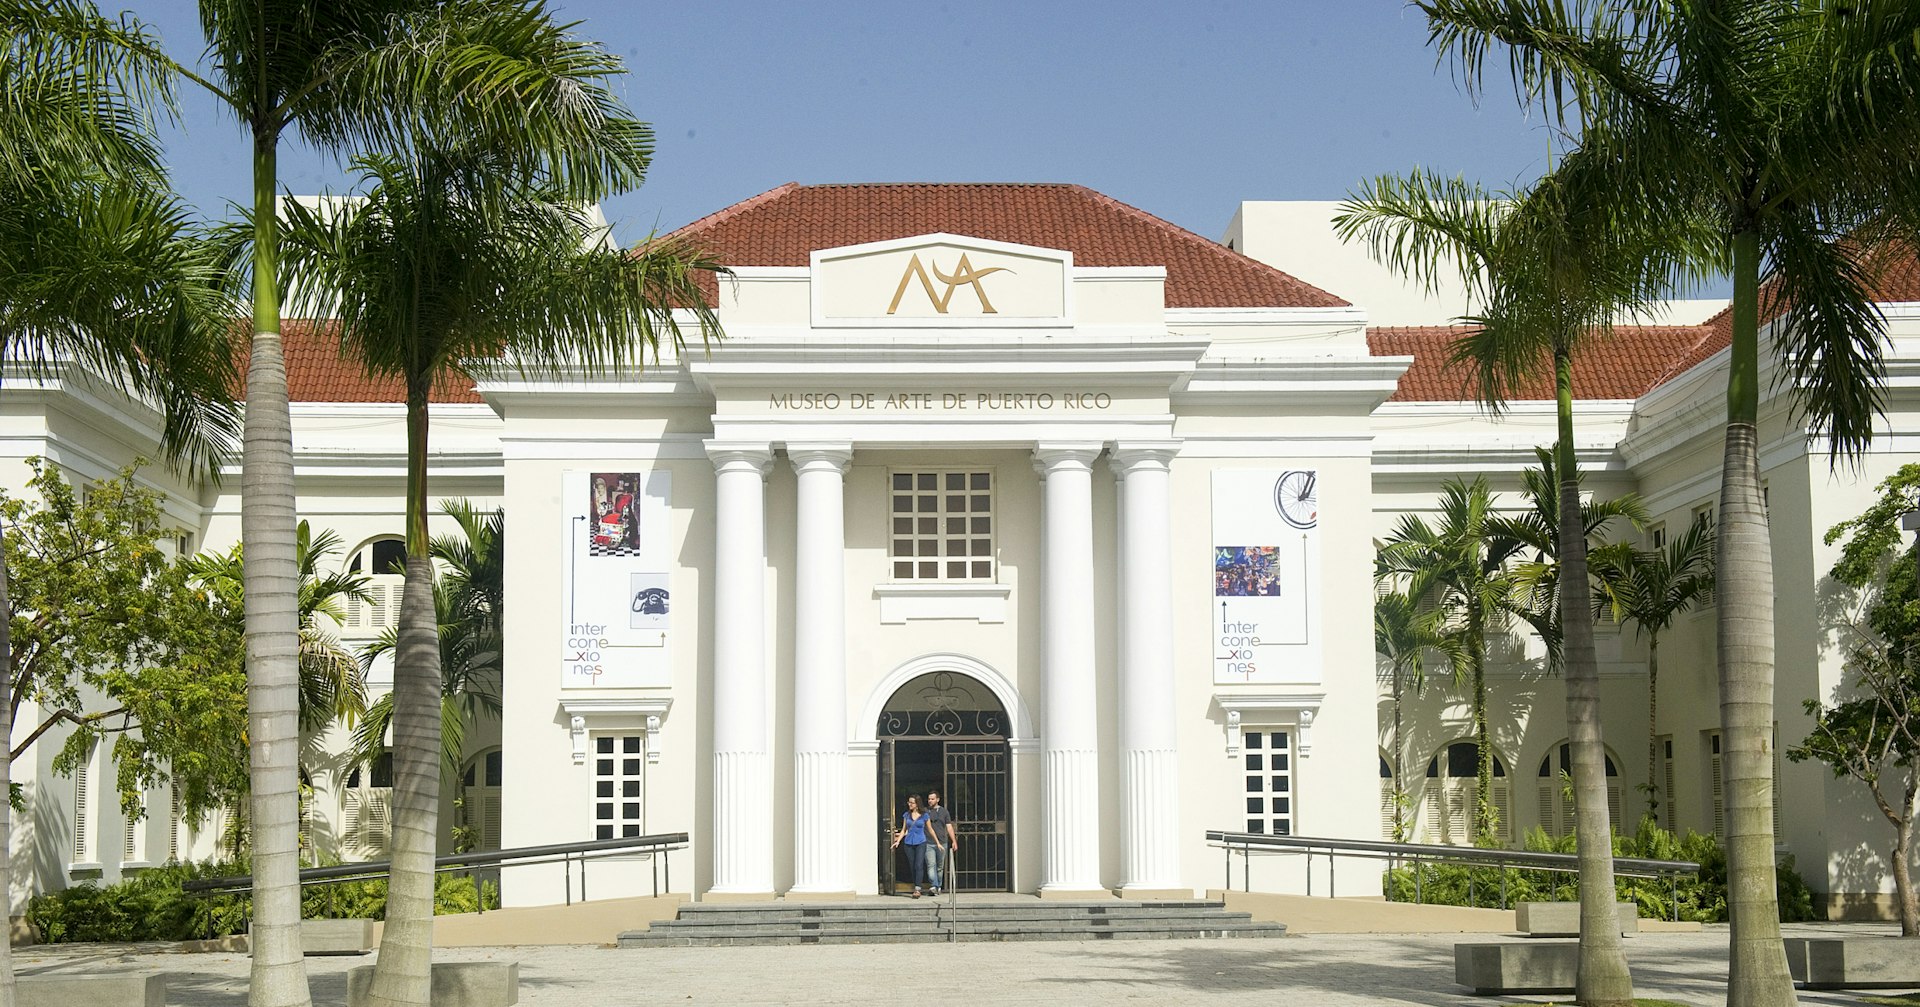 Palm trees around the entrance of the Museo de Arte de Puerto Rico